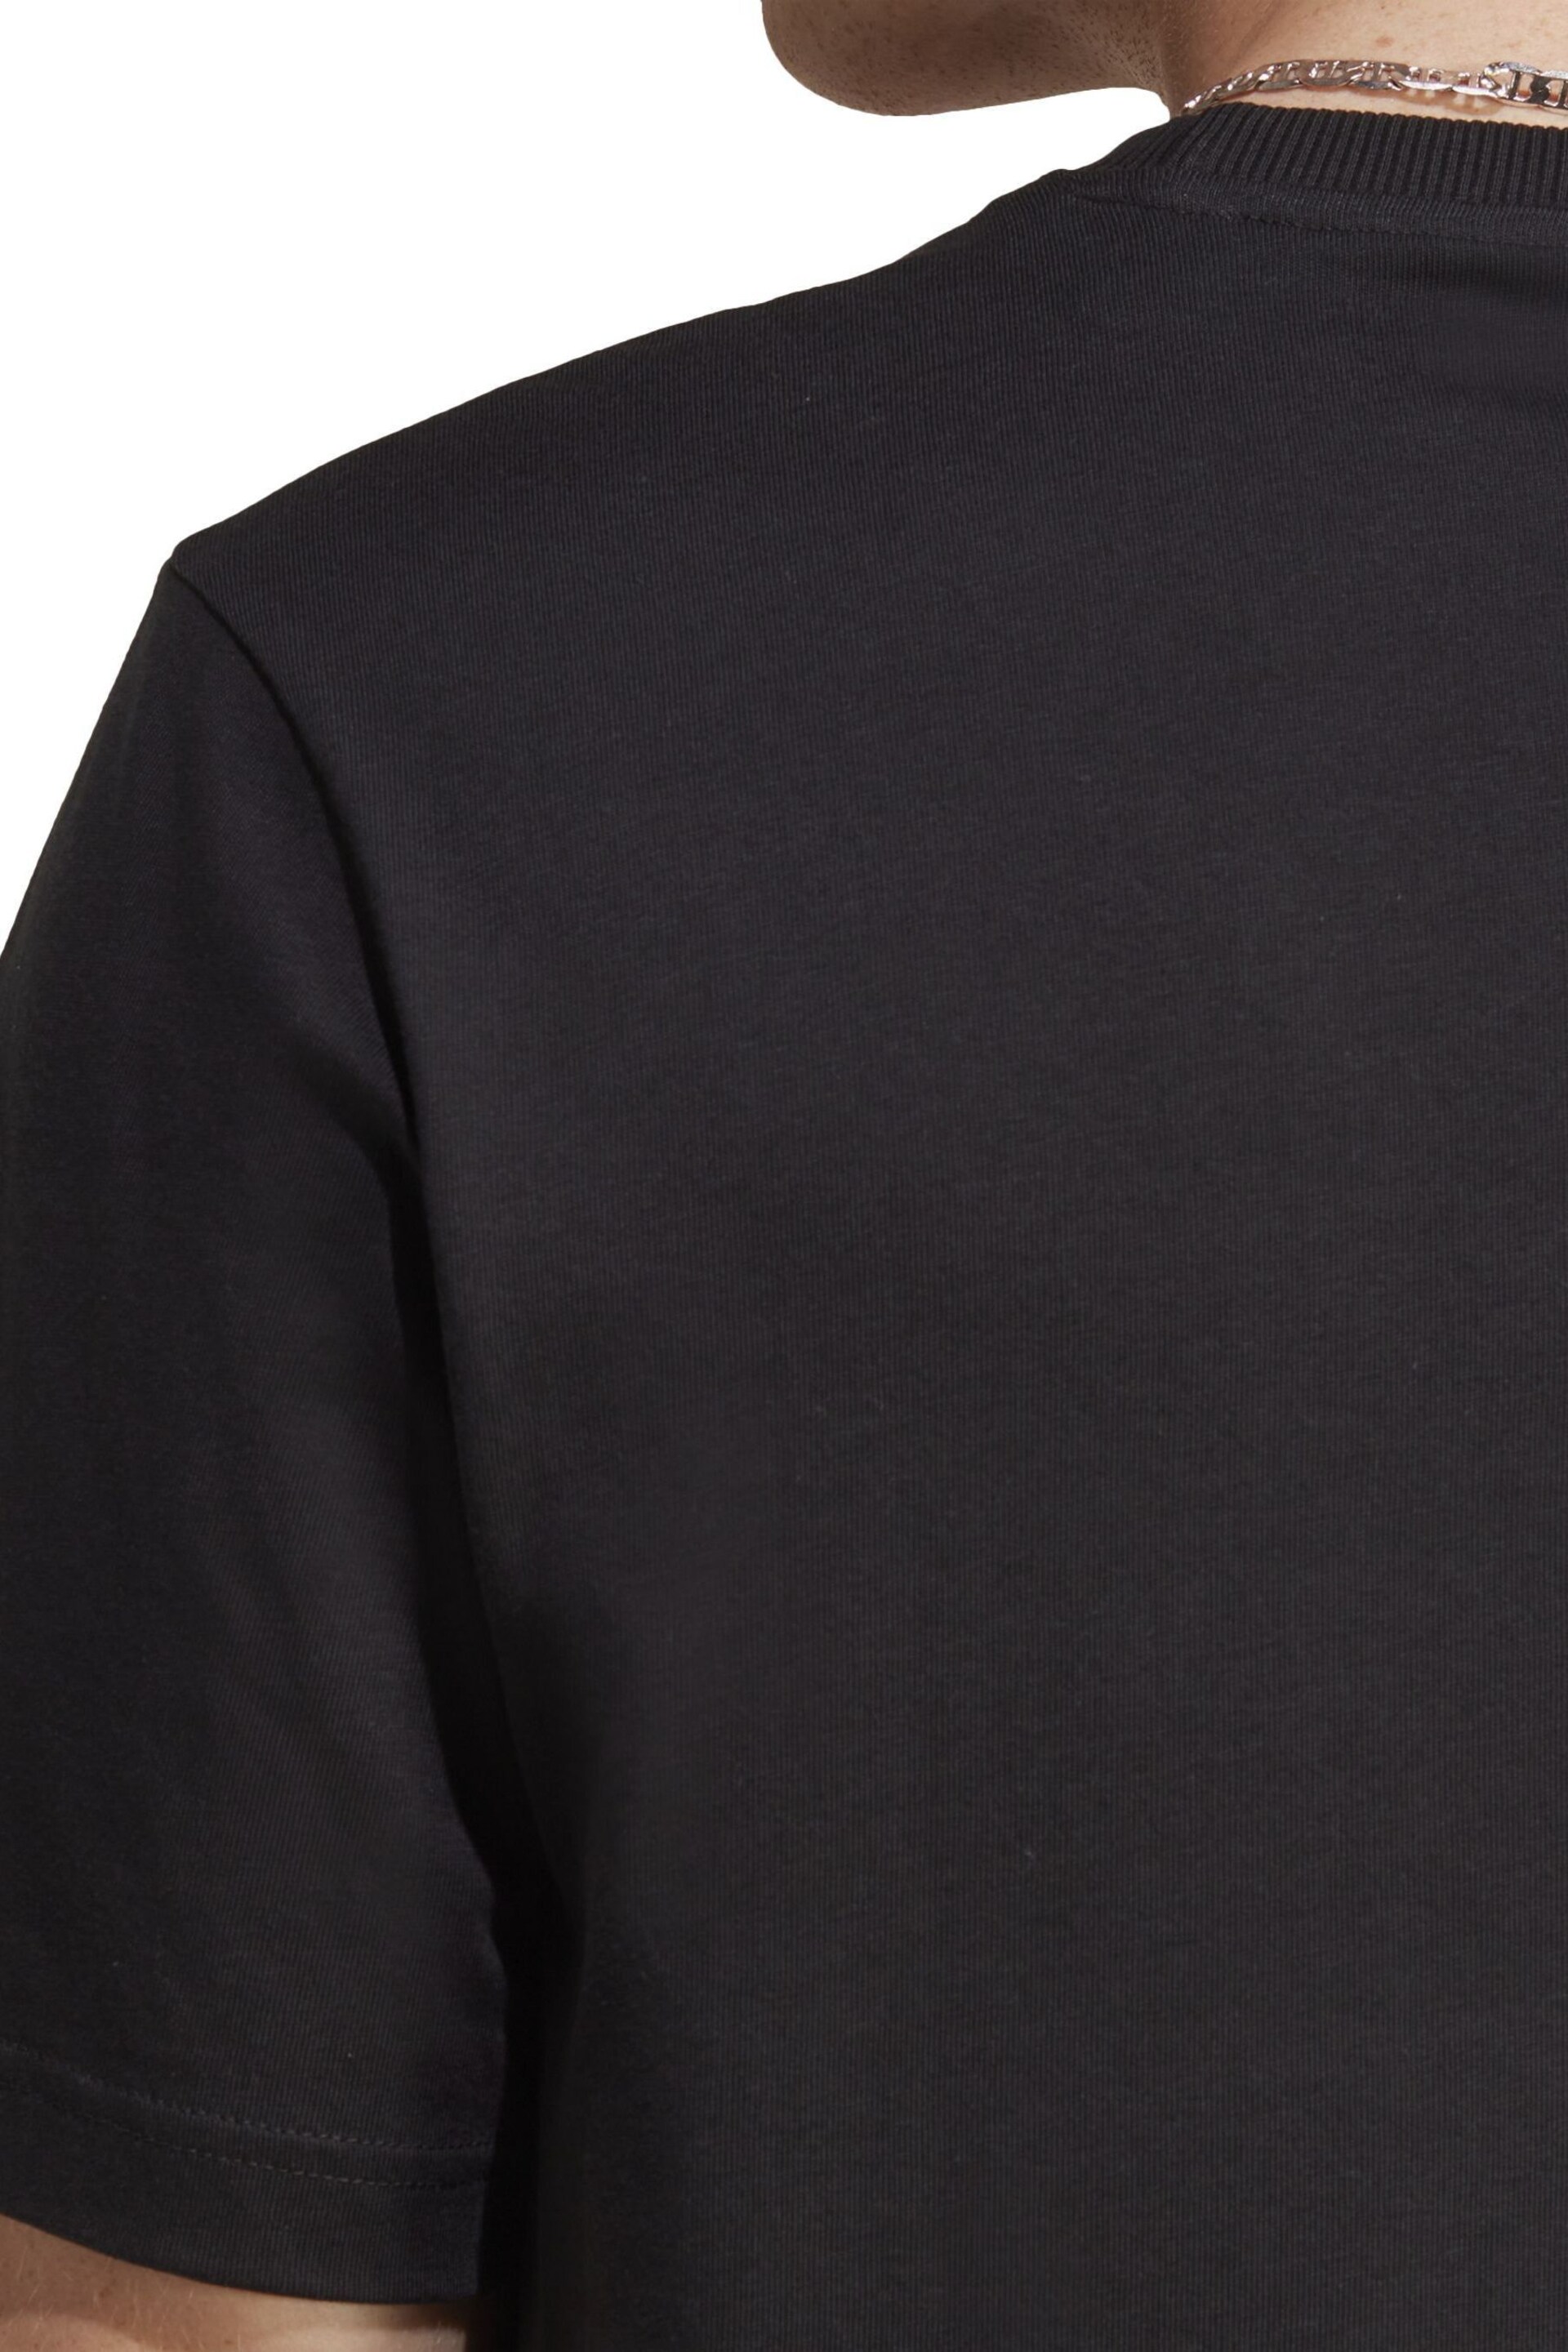 adidas Black Sportswear All SZN T-Shirt - Image 9 of 11